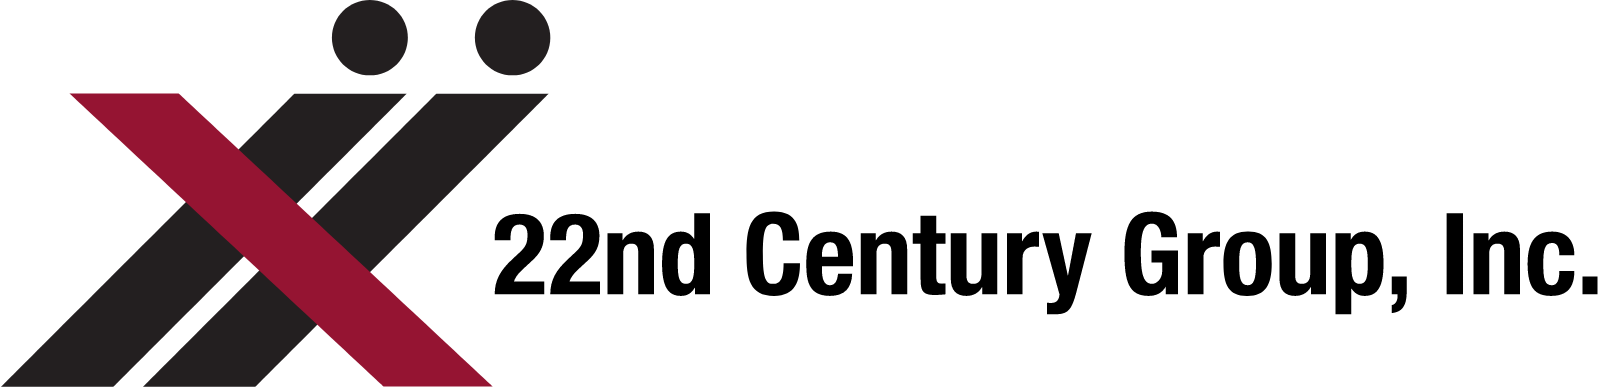 22nd Century Group
 logo large (transparent PNG)